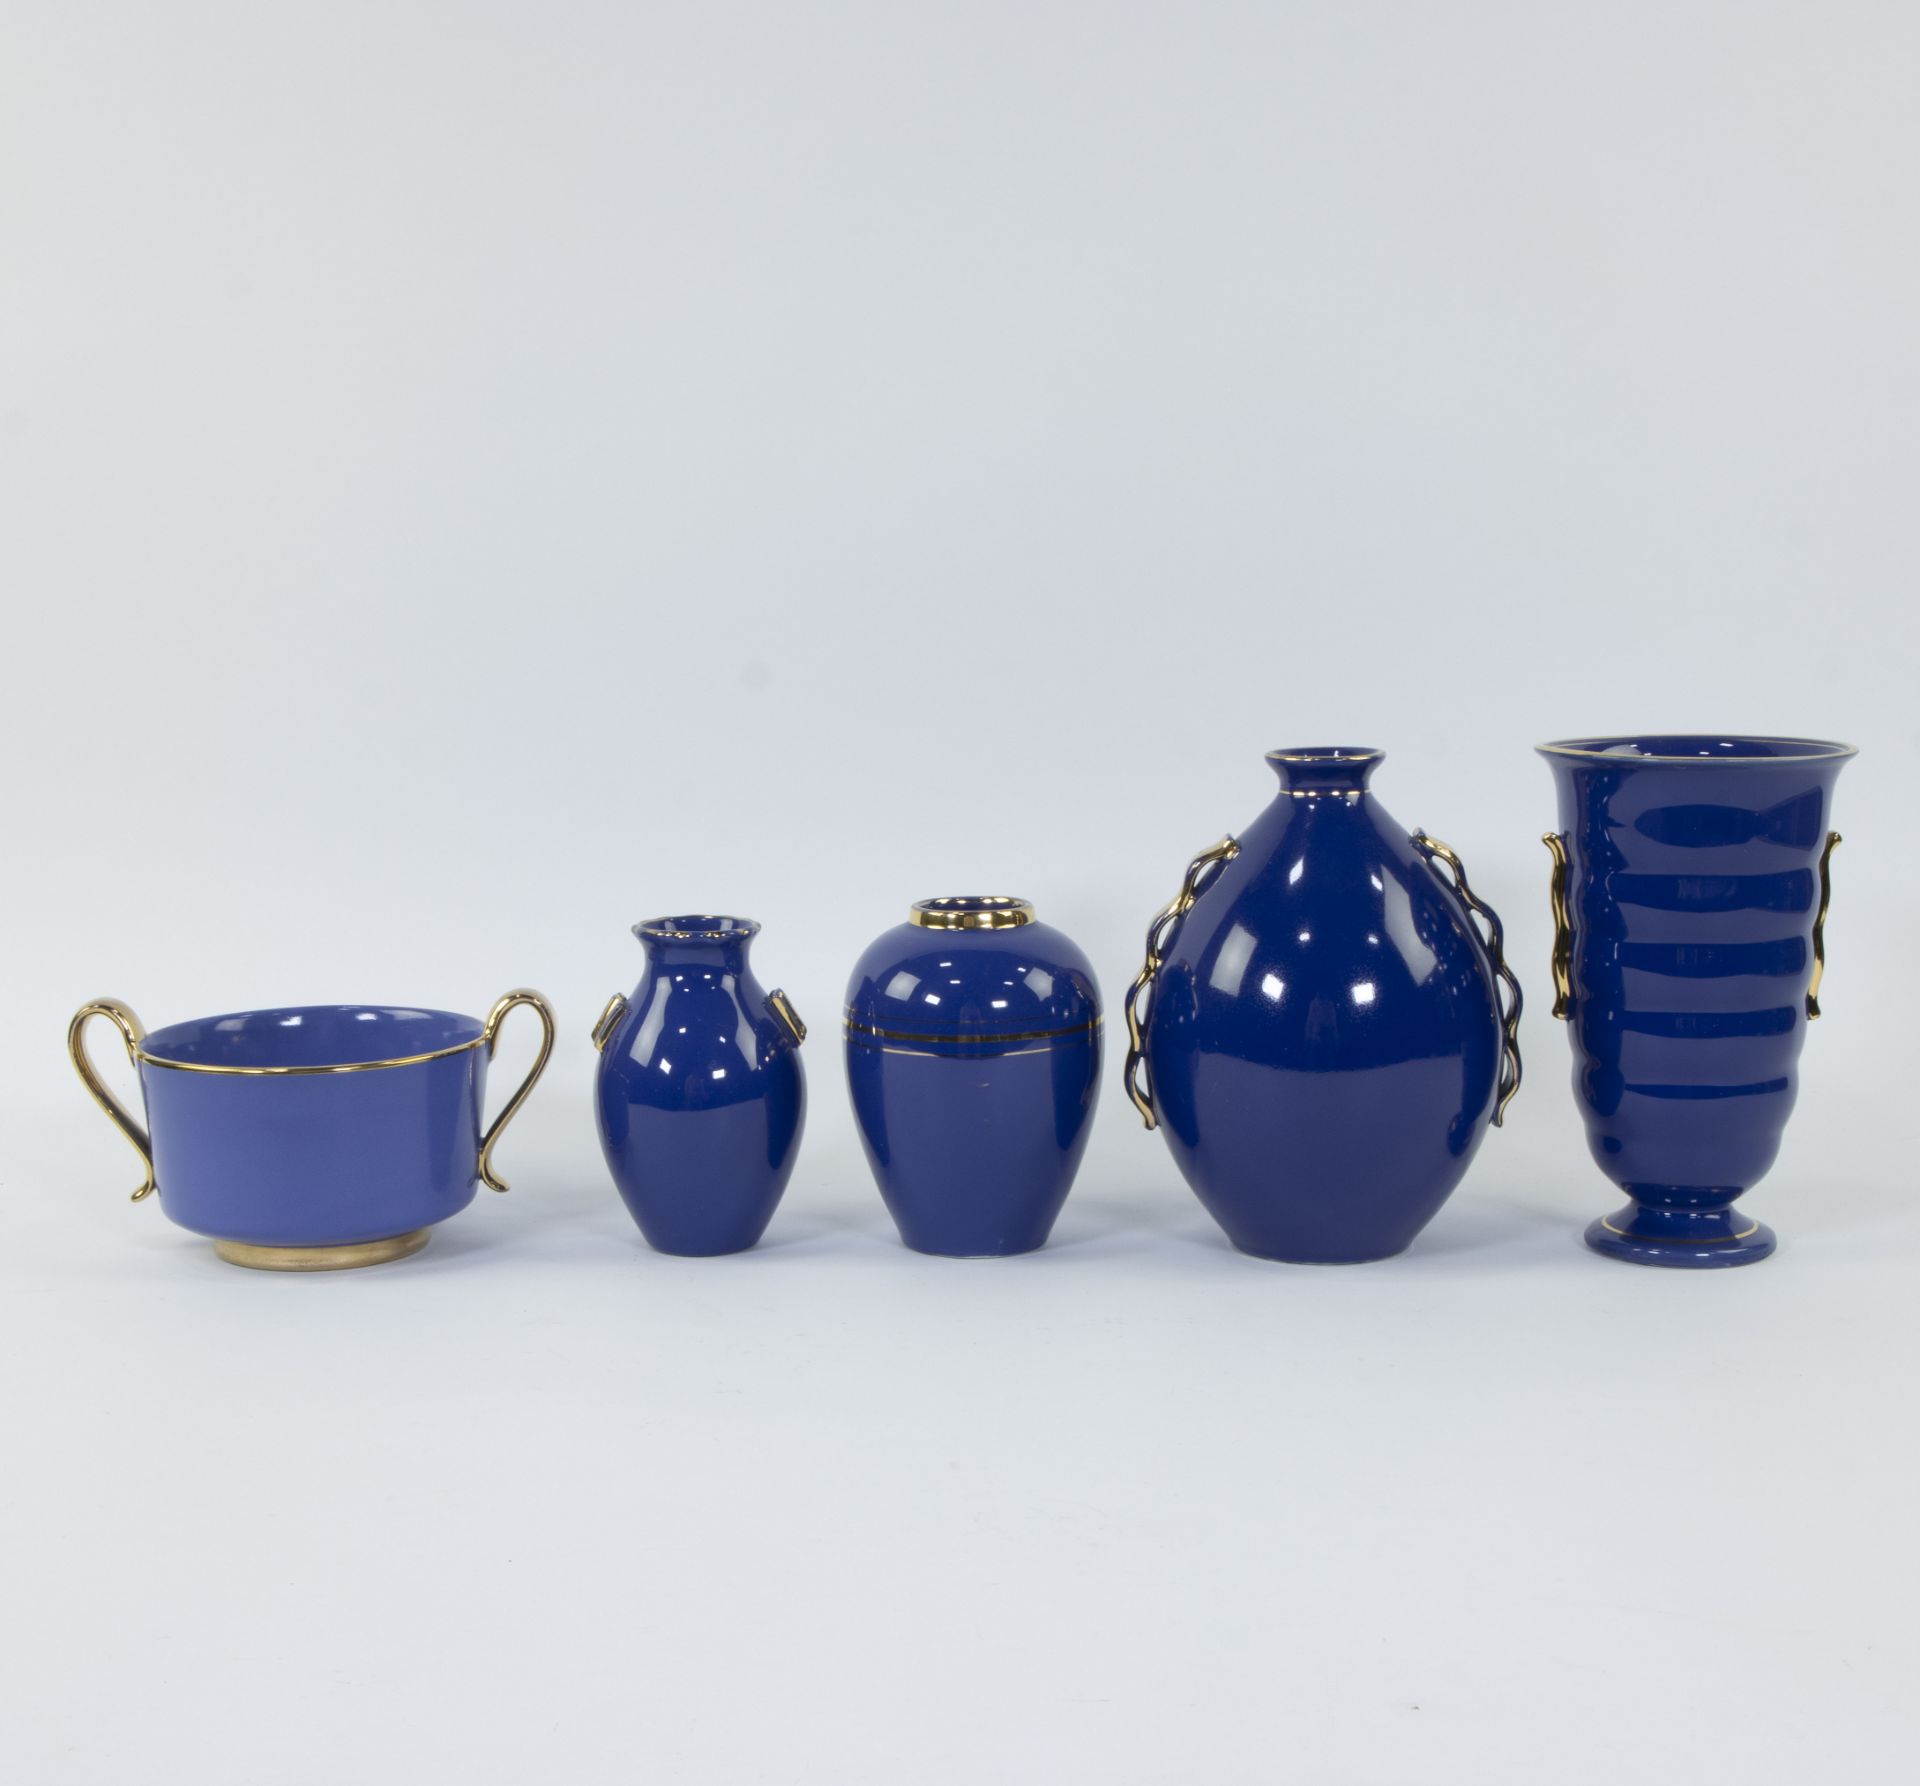 Collection of blue ceramic vases Boch Frères La Louvière a.o. design by Raymond Chevalier, marked